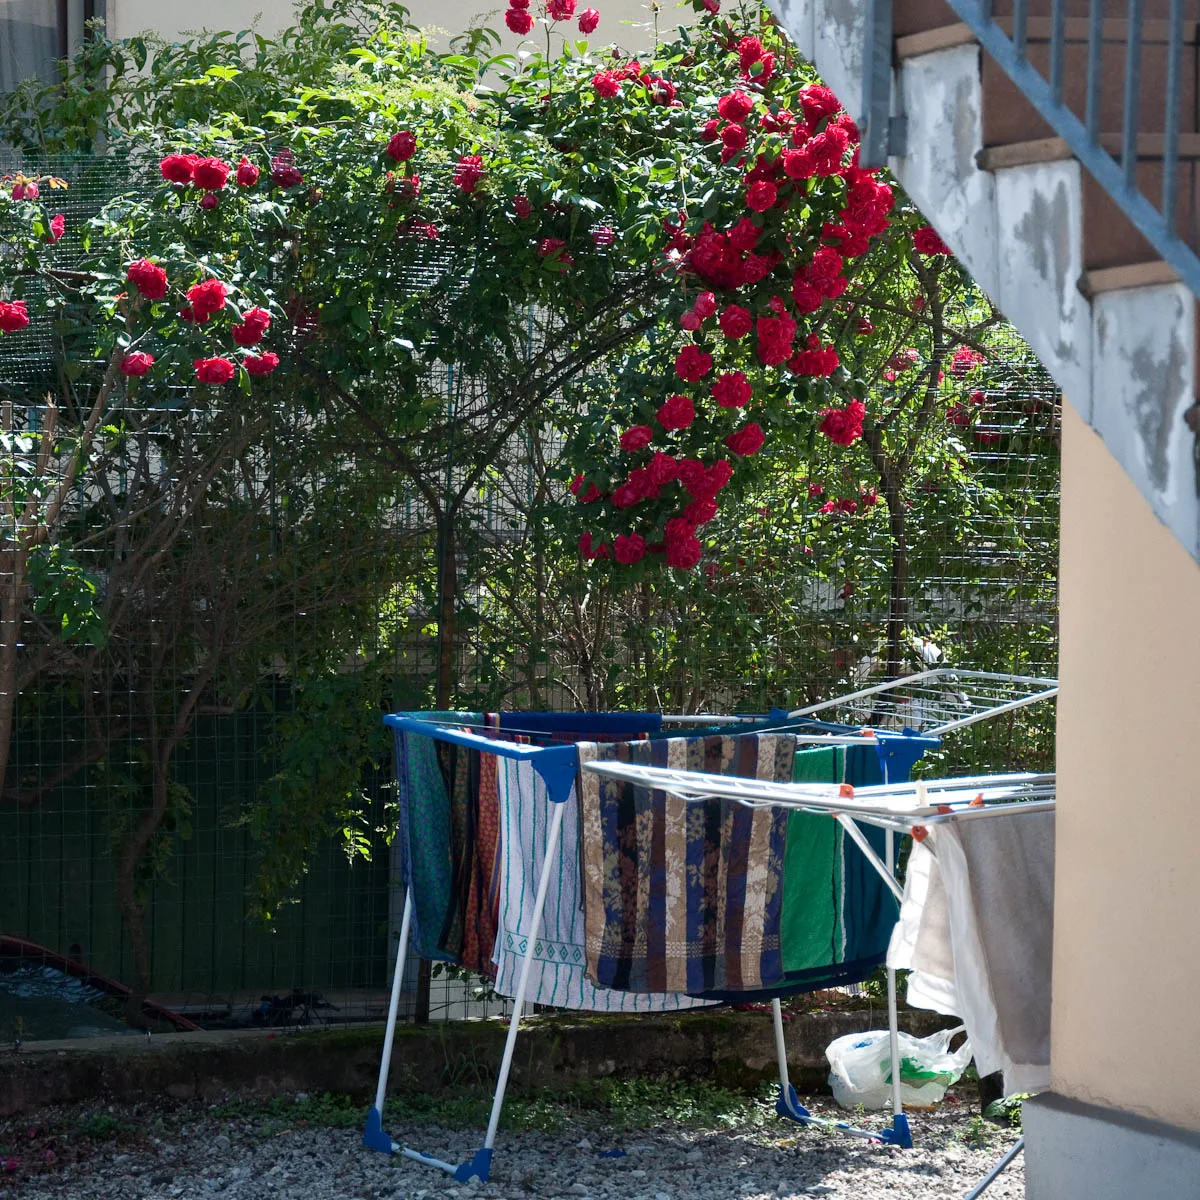 A rose bush and fresh laundry, Vicenza, Italy